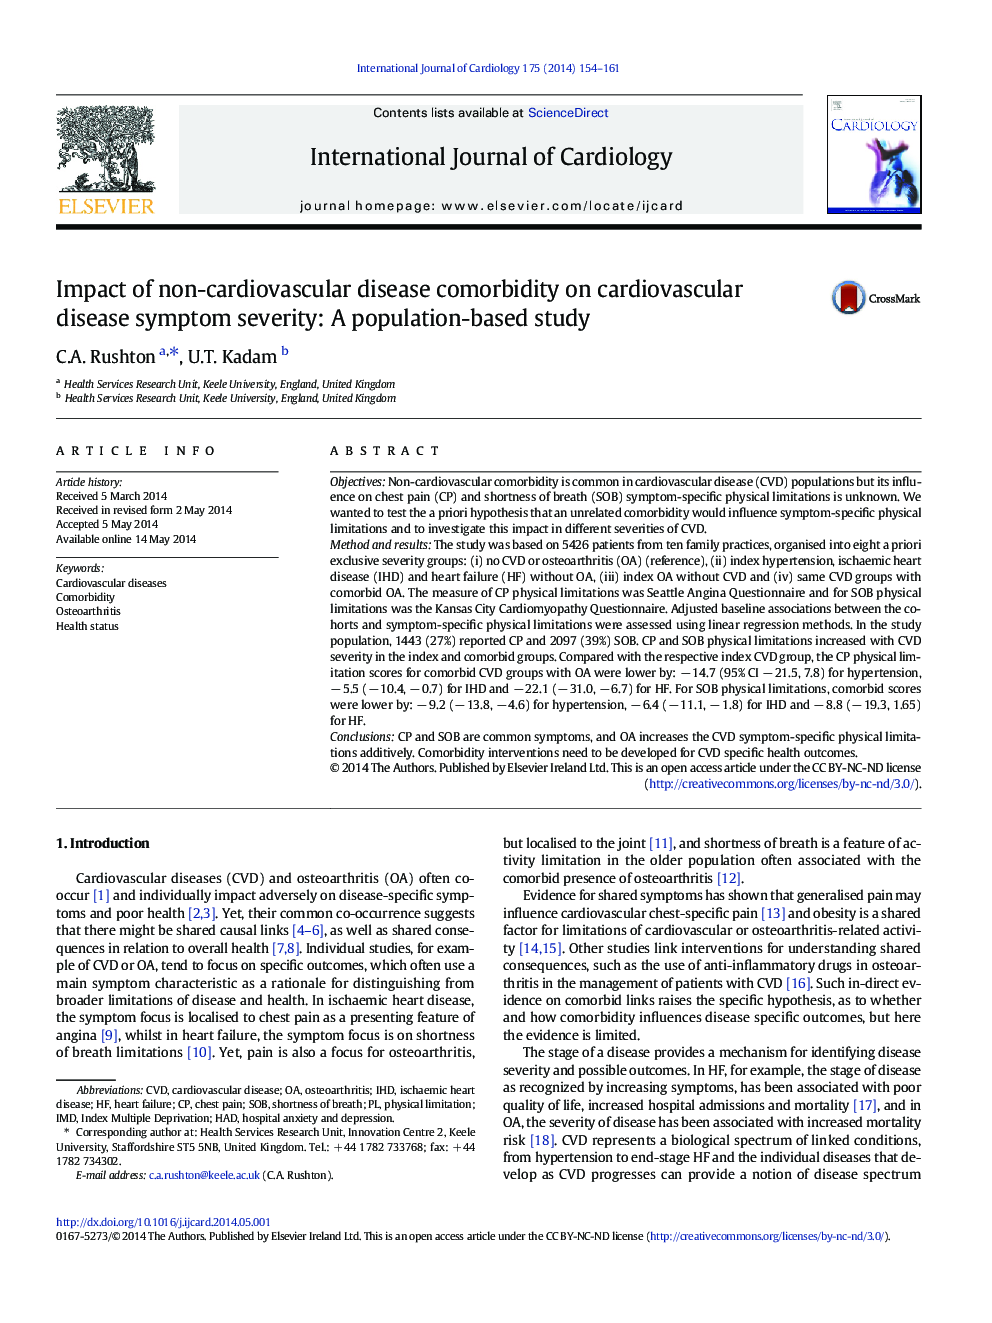 Impact of non-cardiovascular disease comorbidity on cardiovascular disease symptom severity: A population-based study